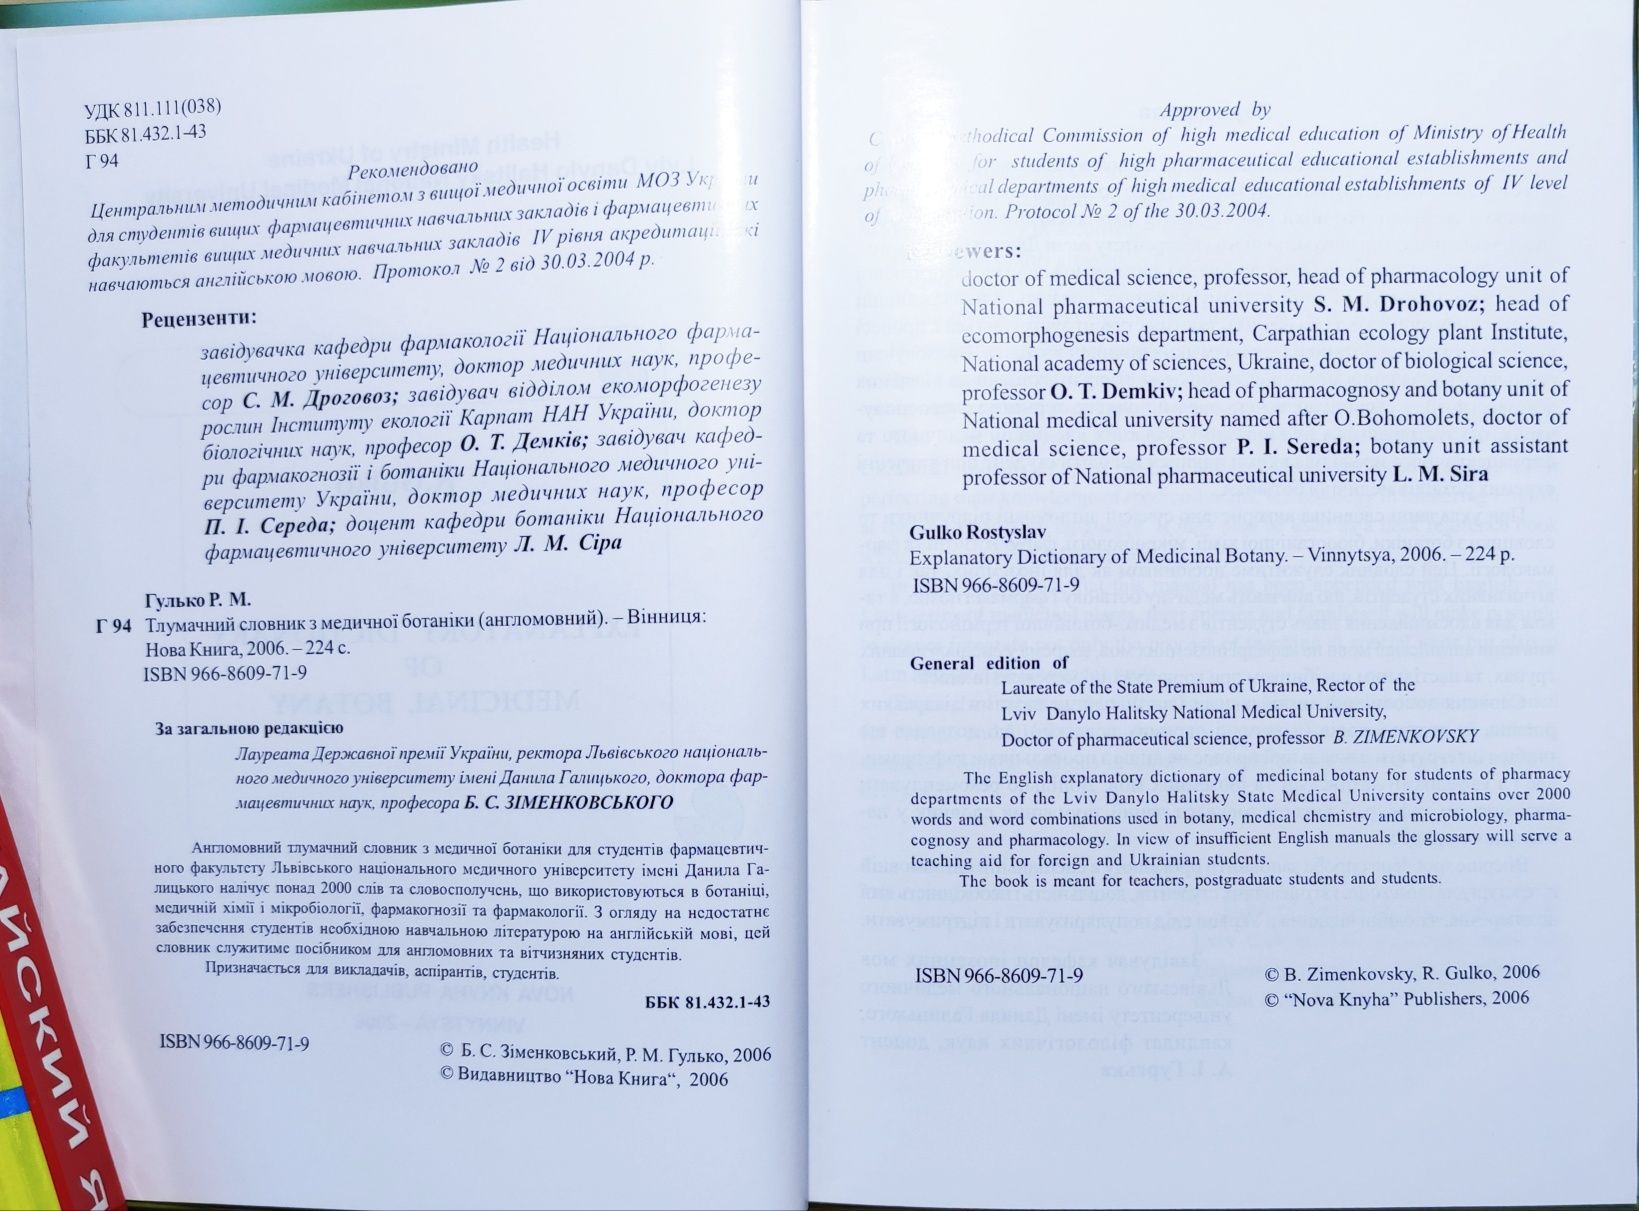 R.Gulko Explanatory dictionary of medical botany Тлумачний словник